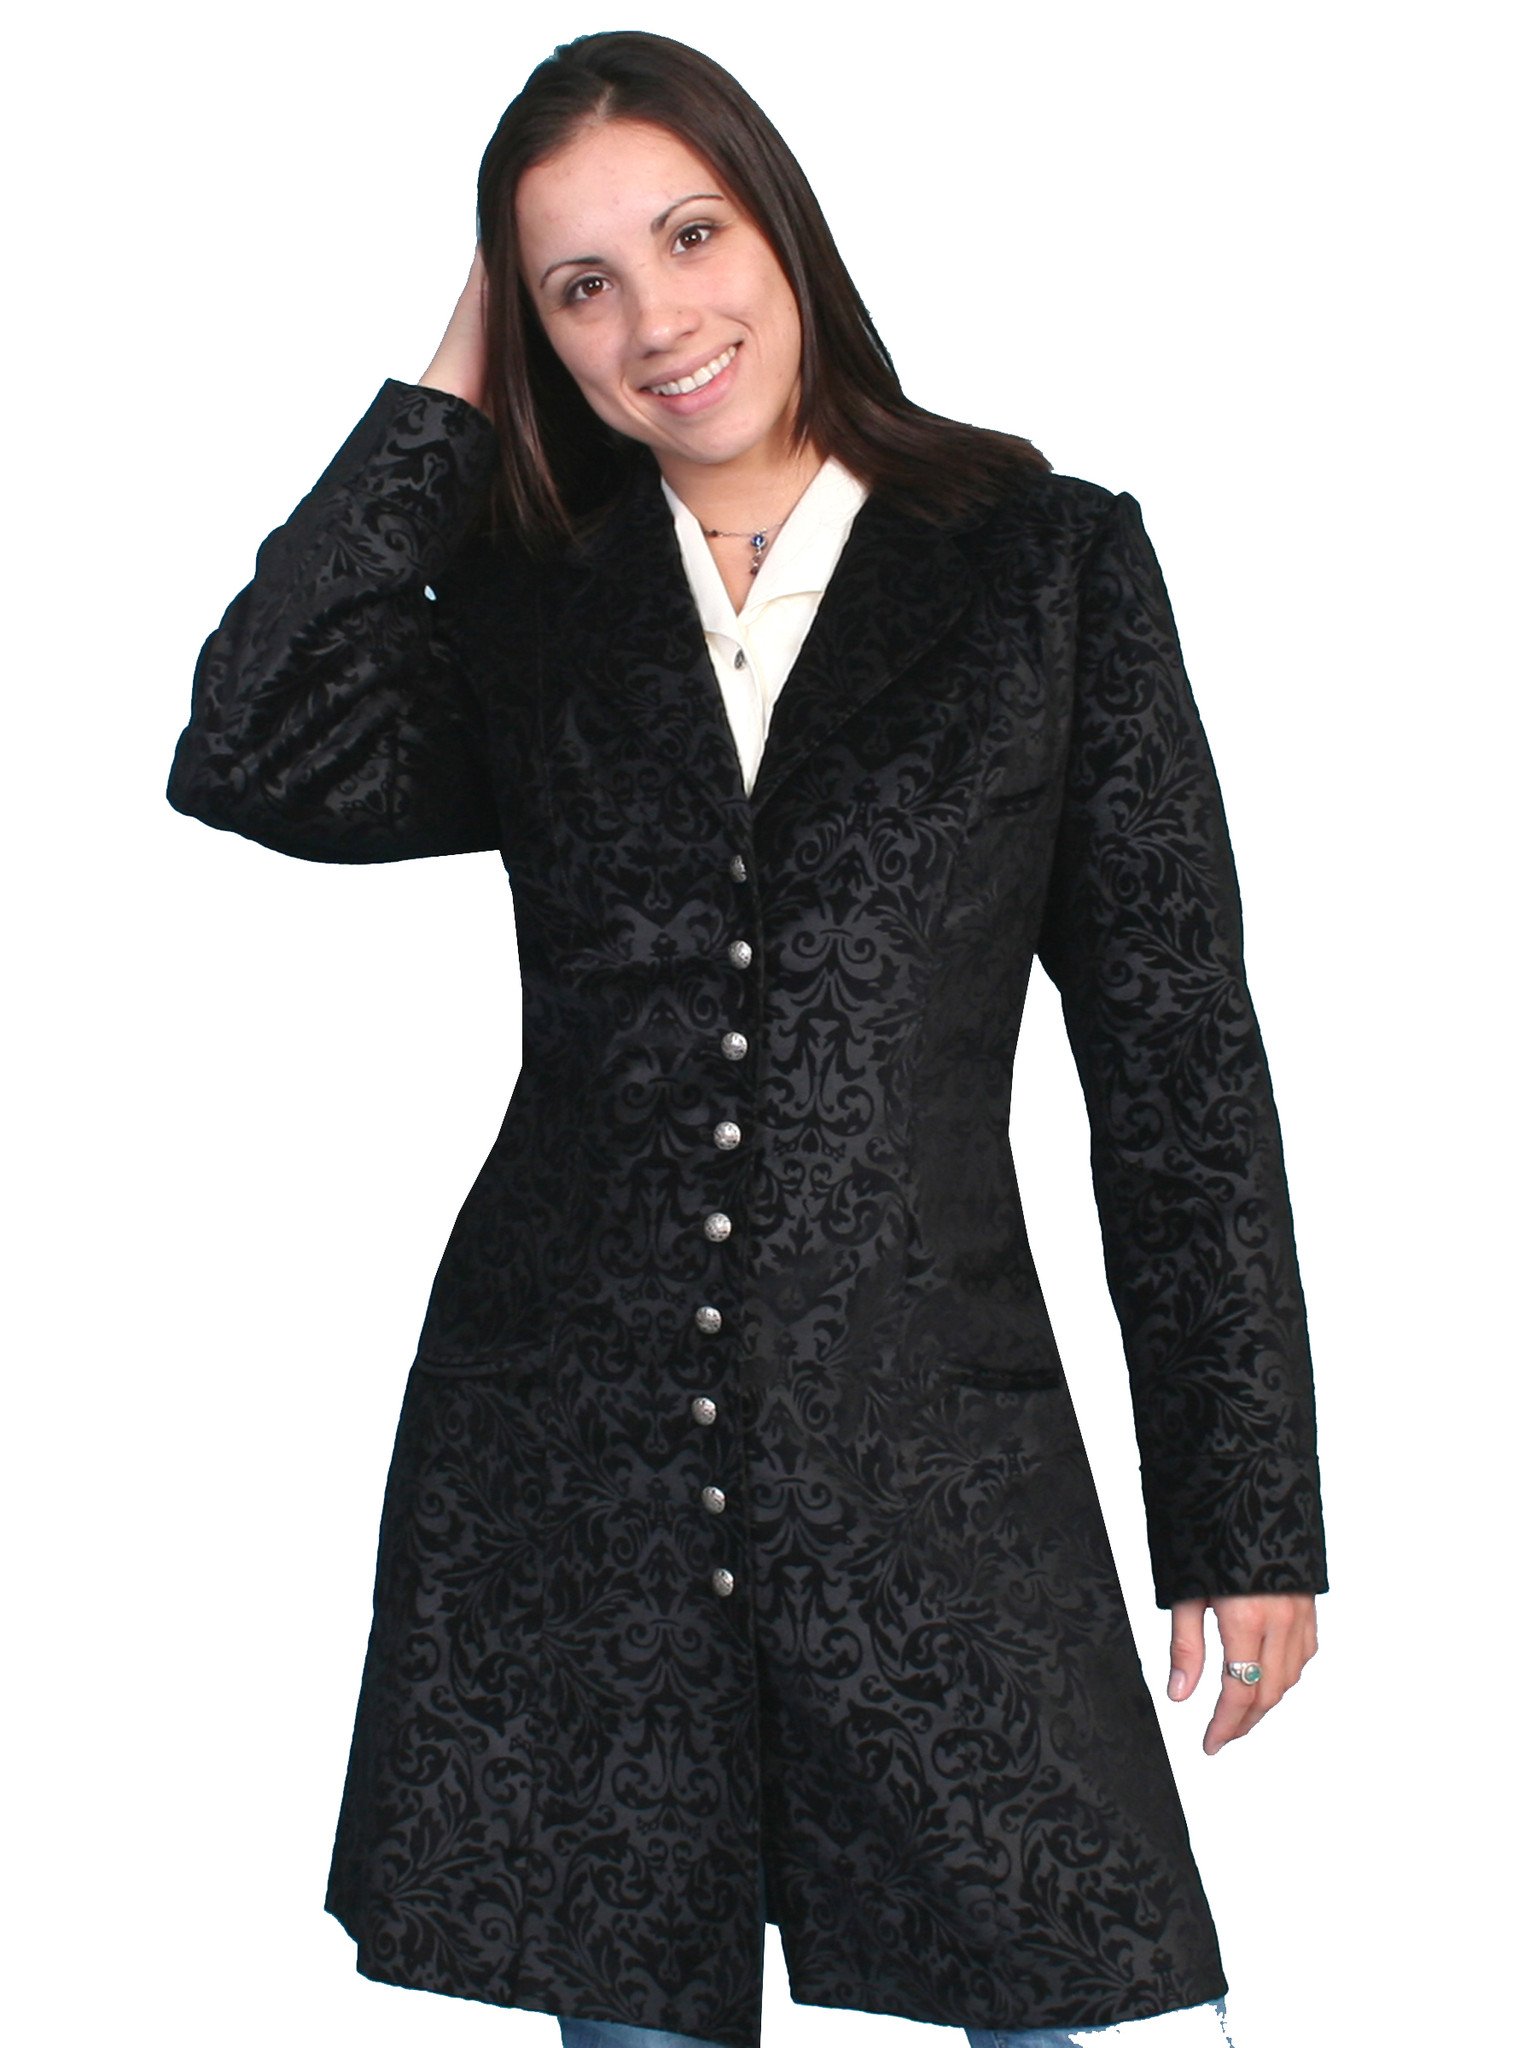 Ladies Frock coat scully ladies wahmaker old west vintage frock coat flocked cotton ... ZBIYYHX